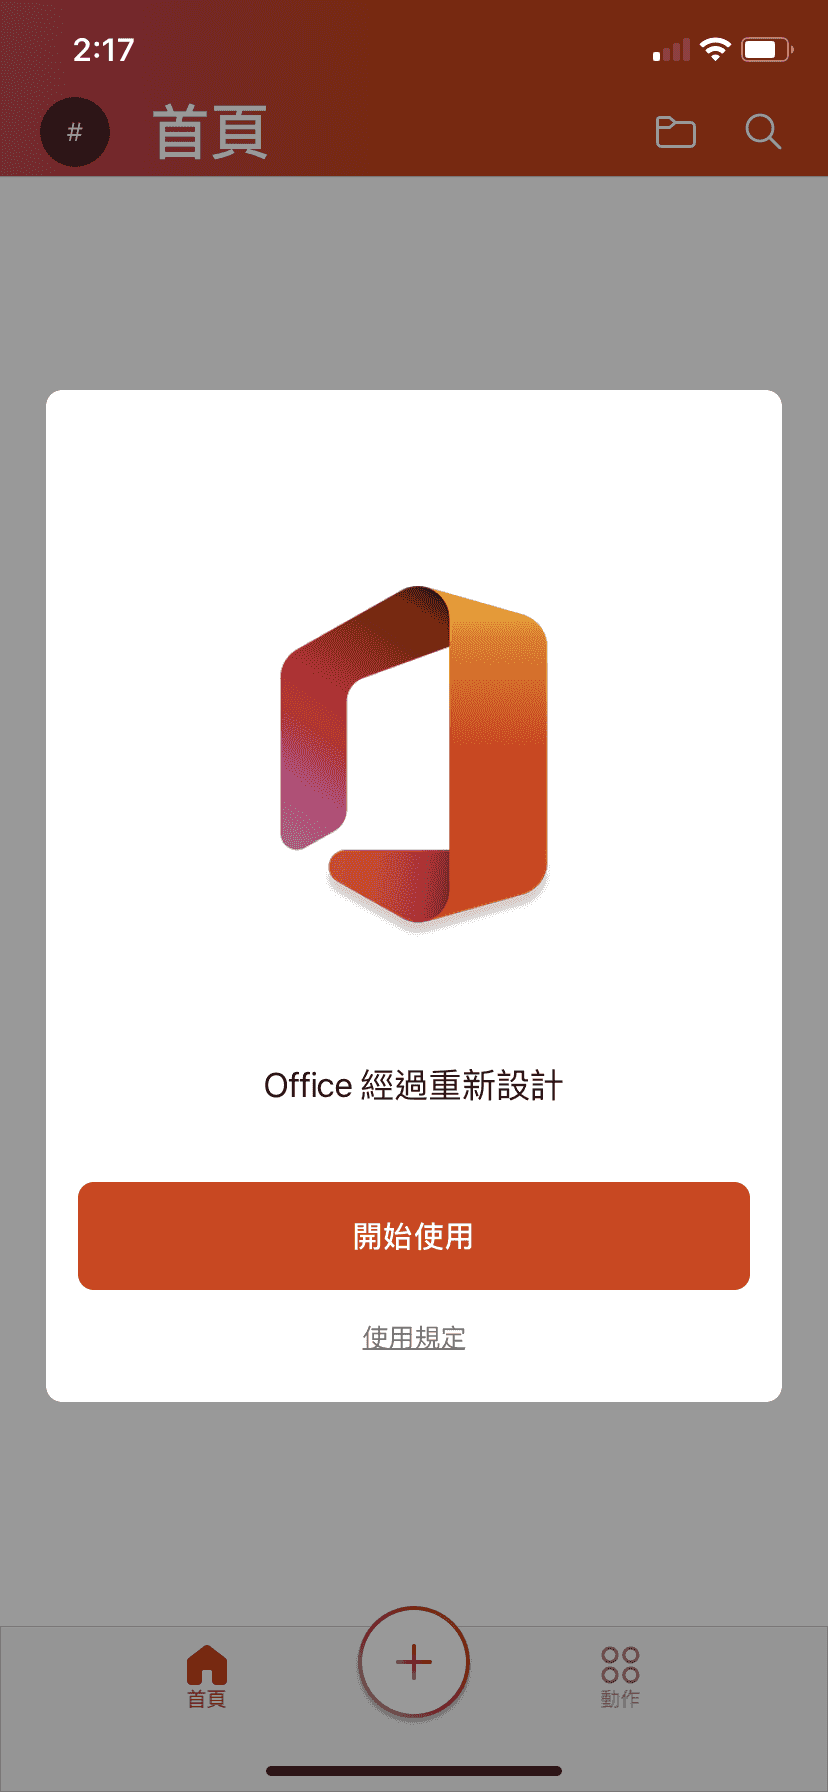 Microsoft Office APP - 初始畫面